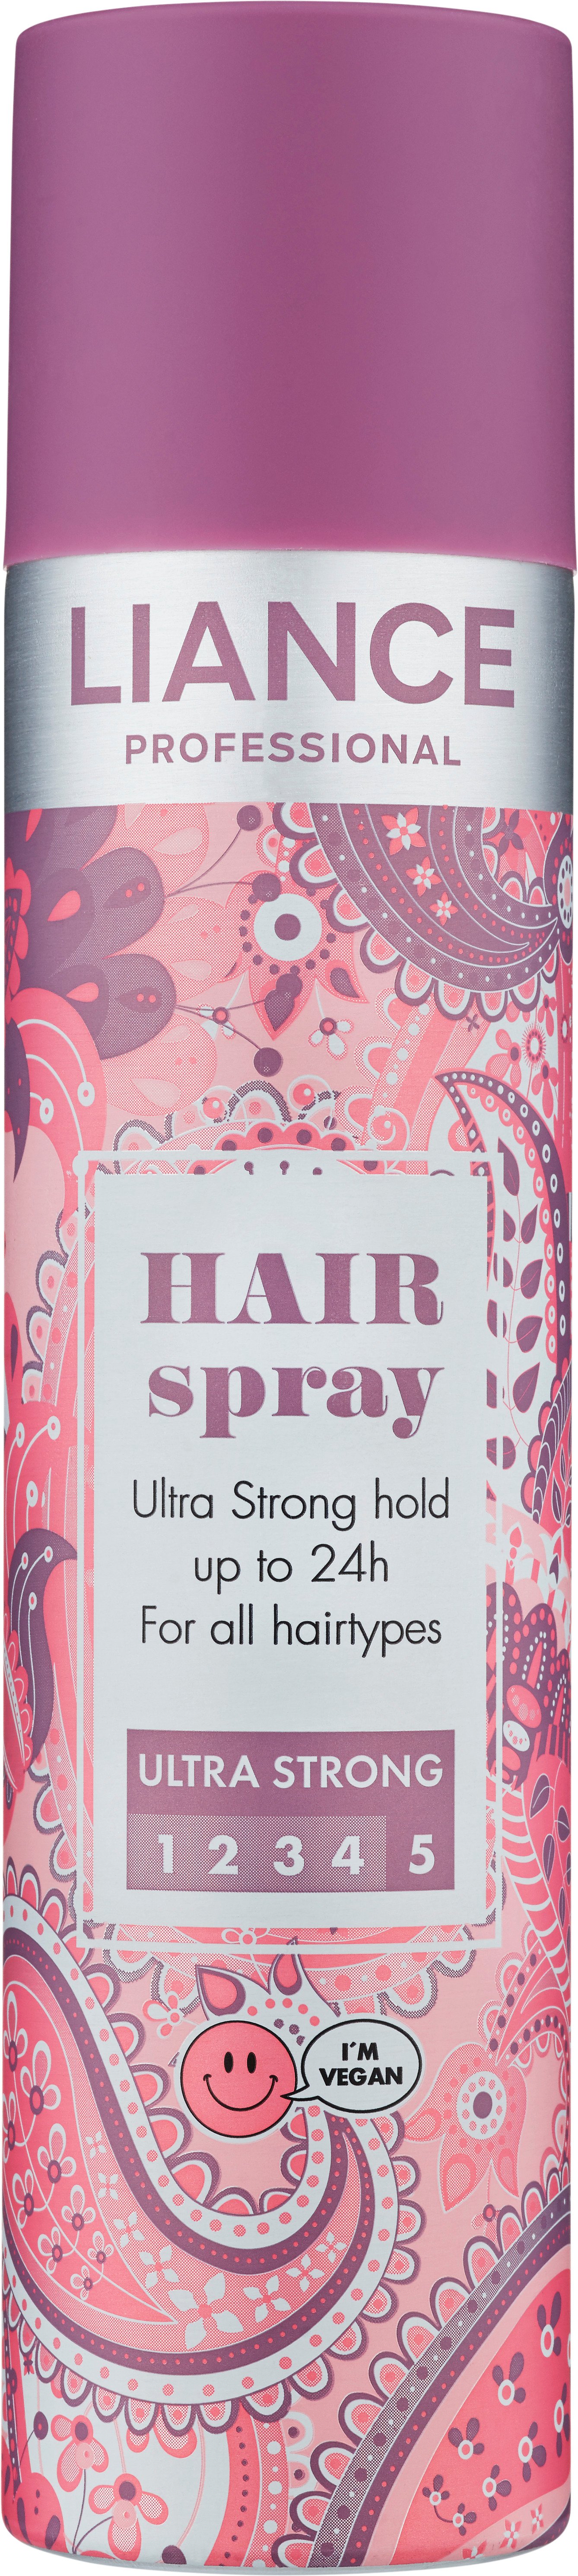 Liance Hairspray Ultra Strong 300 ml